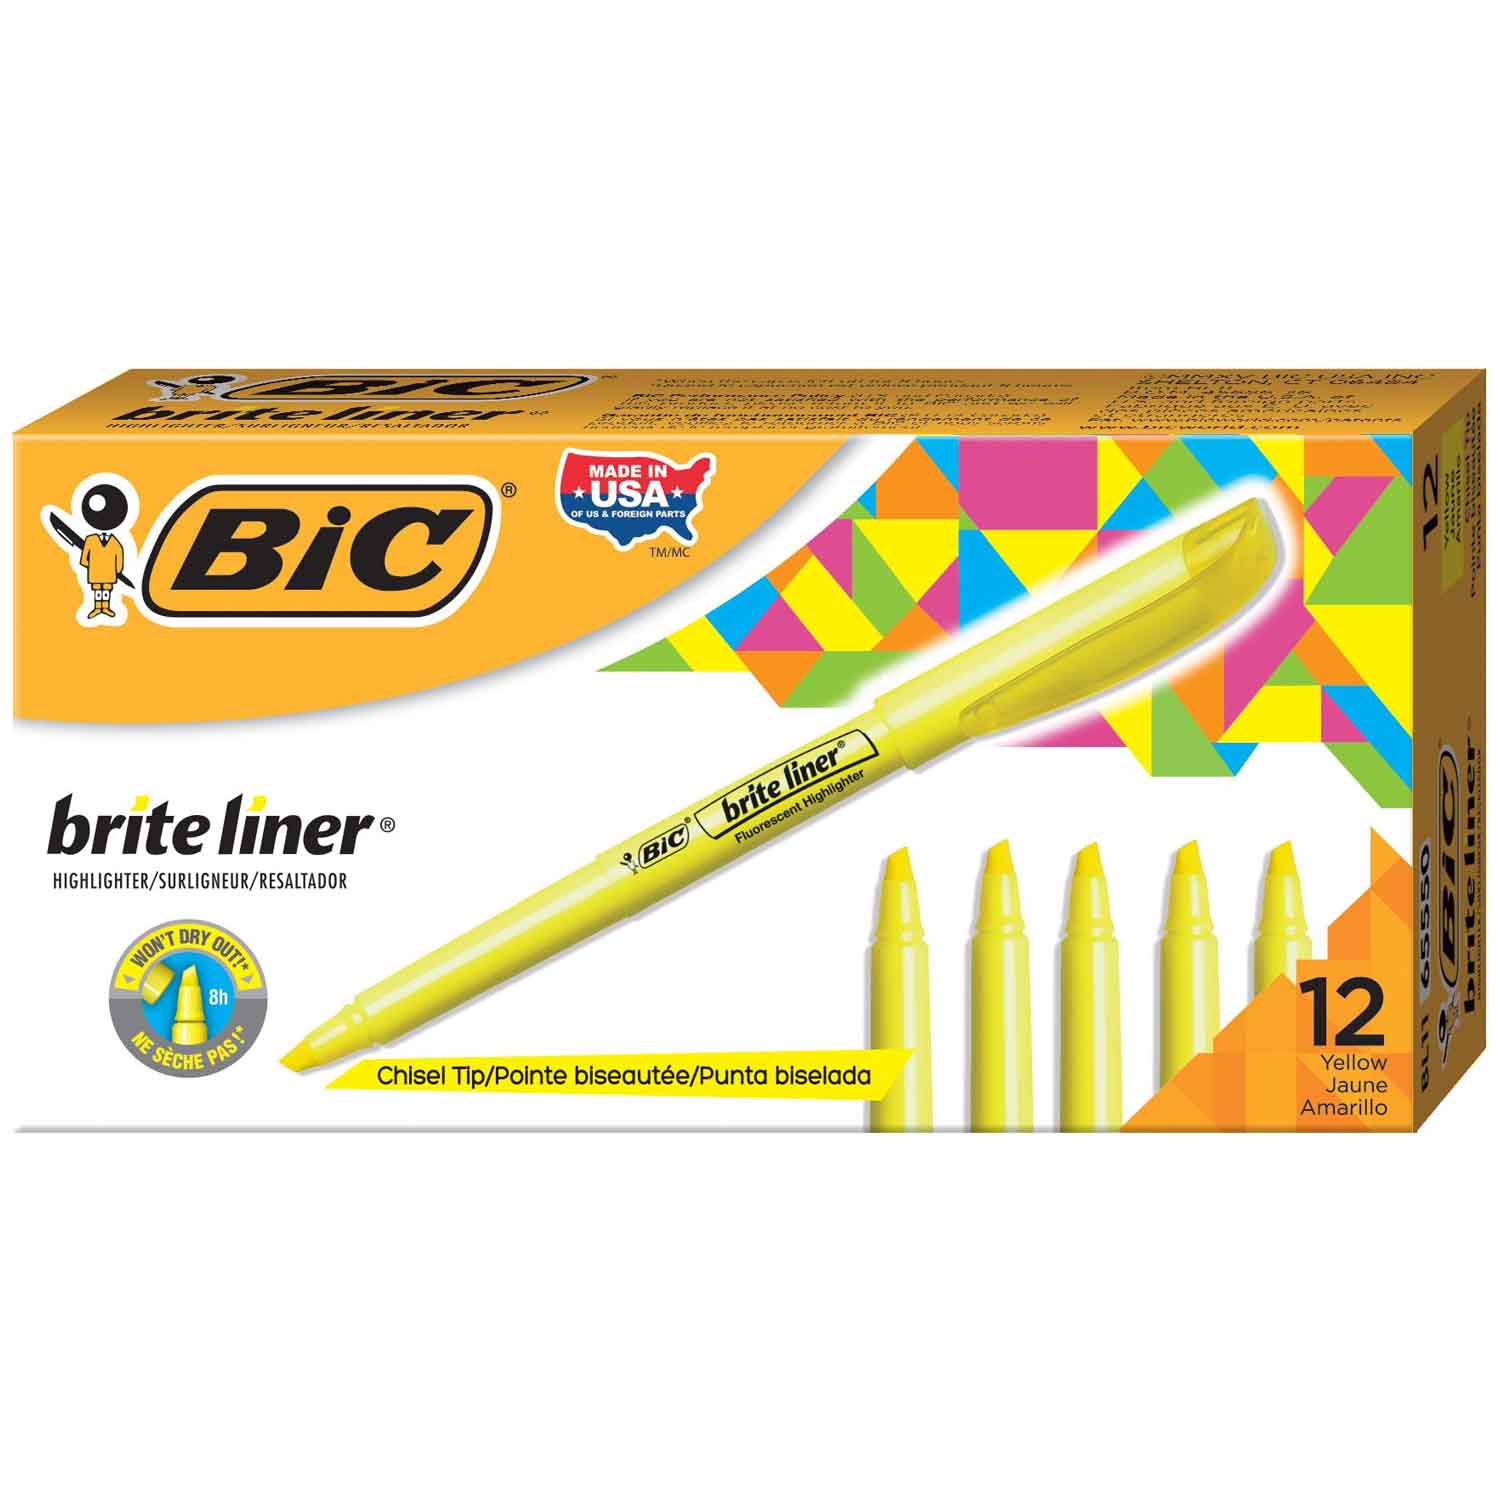 Bic® Brite Liner® Highlighters